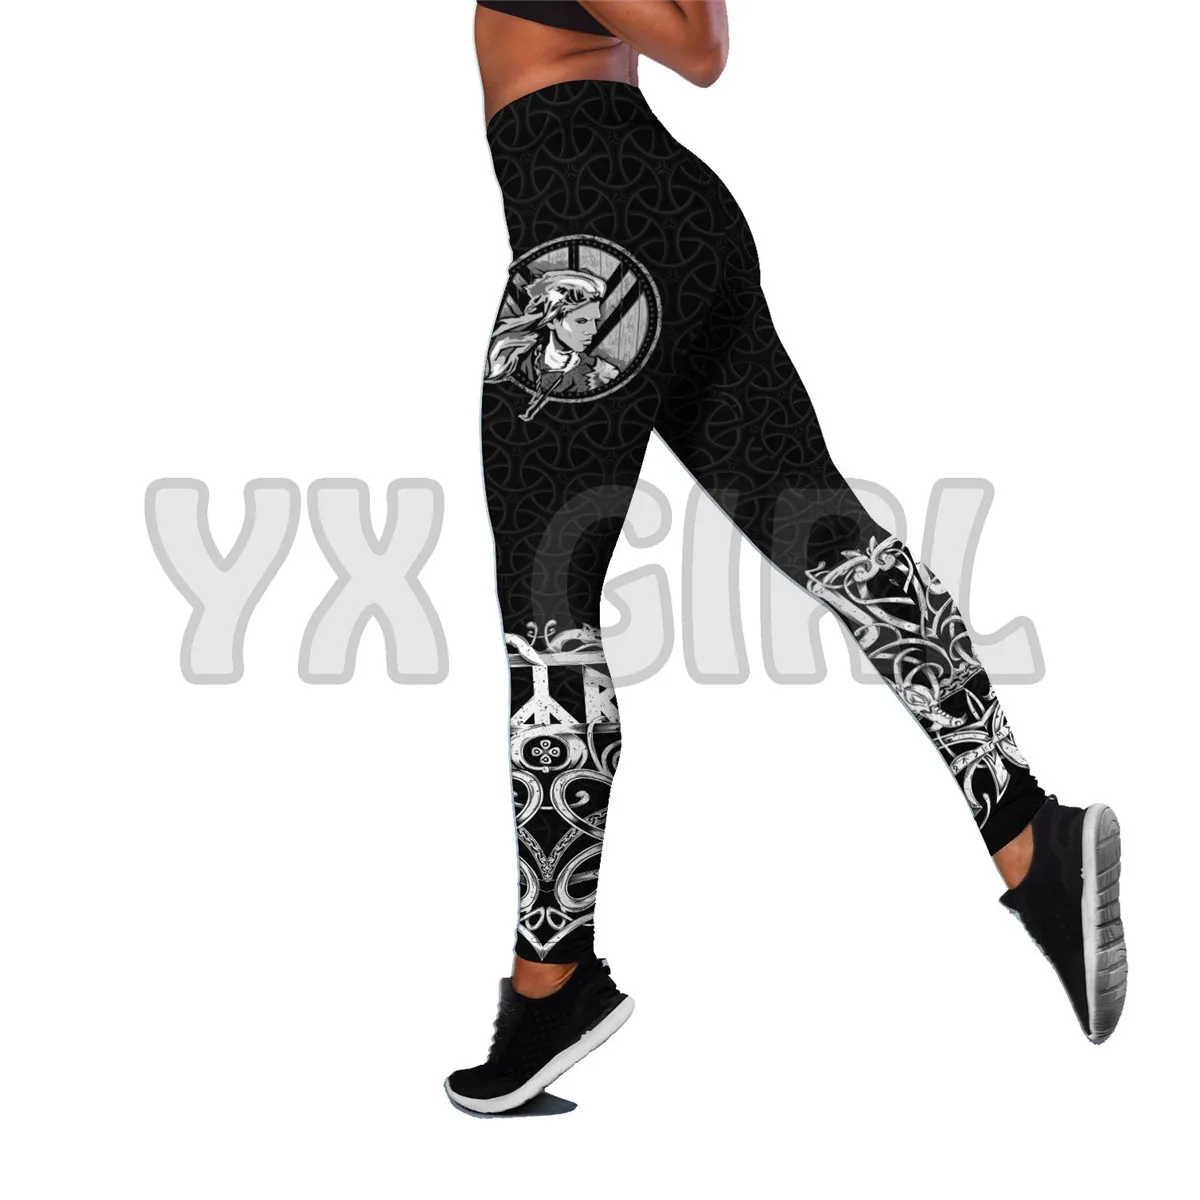 Viking - Shield maiden 3D Printed Tank Top+Legging Combo Outfit Yoga Fitness Legging Women